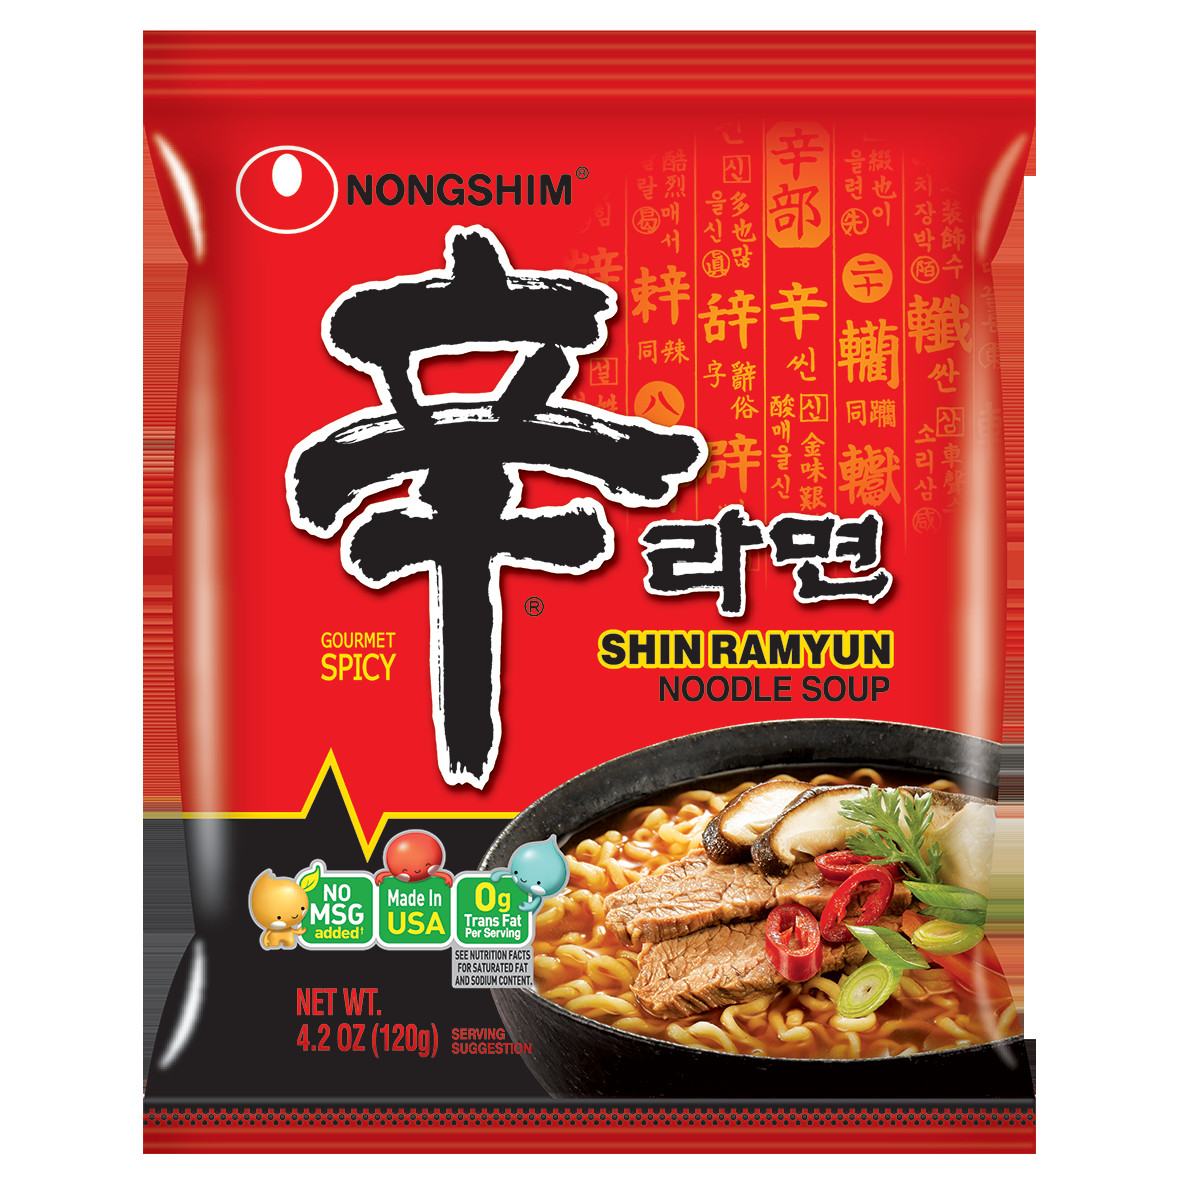 Ramen Noodles Brands
 Amazon Nongshim Shin Ramyun Noodle Soup Gourmet